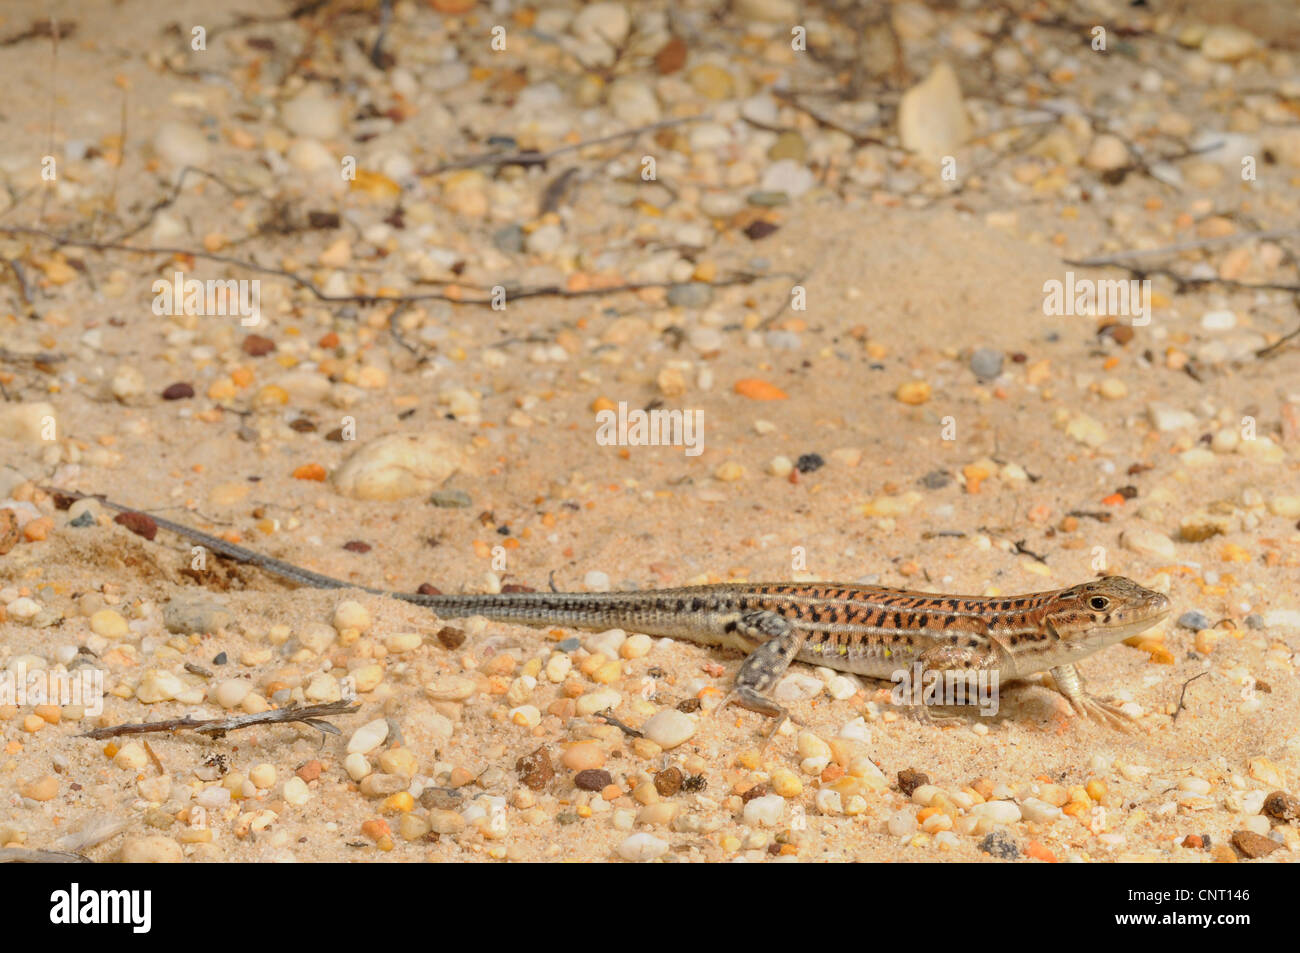 Spinosa-footed lizard, fringe-dita lizard (Acanthodactylus erythrurus), passeggiate sulla sabbia, Spagna, Andalusia, parco nazionale di Donana Foto Stock